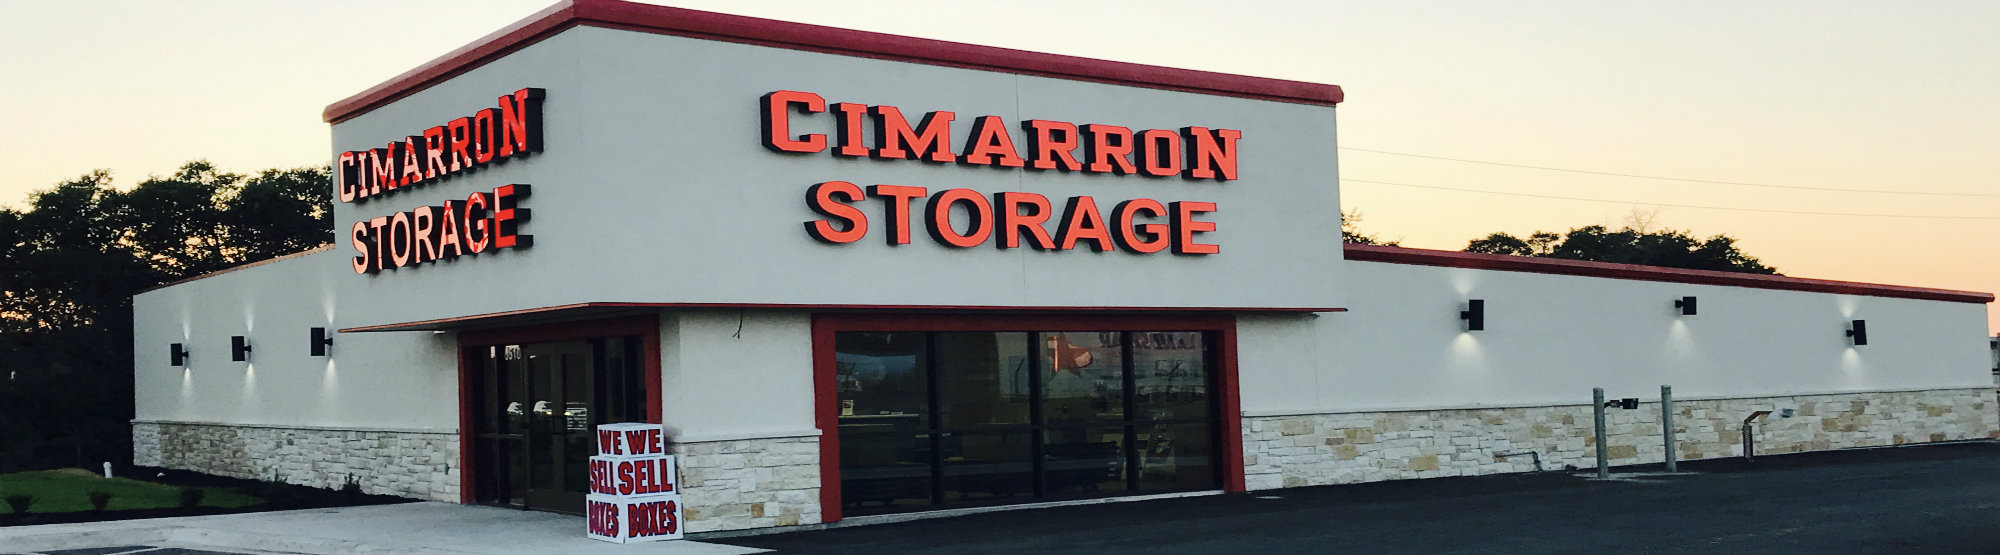 Cimarron Storage